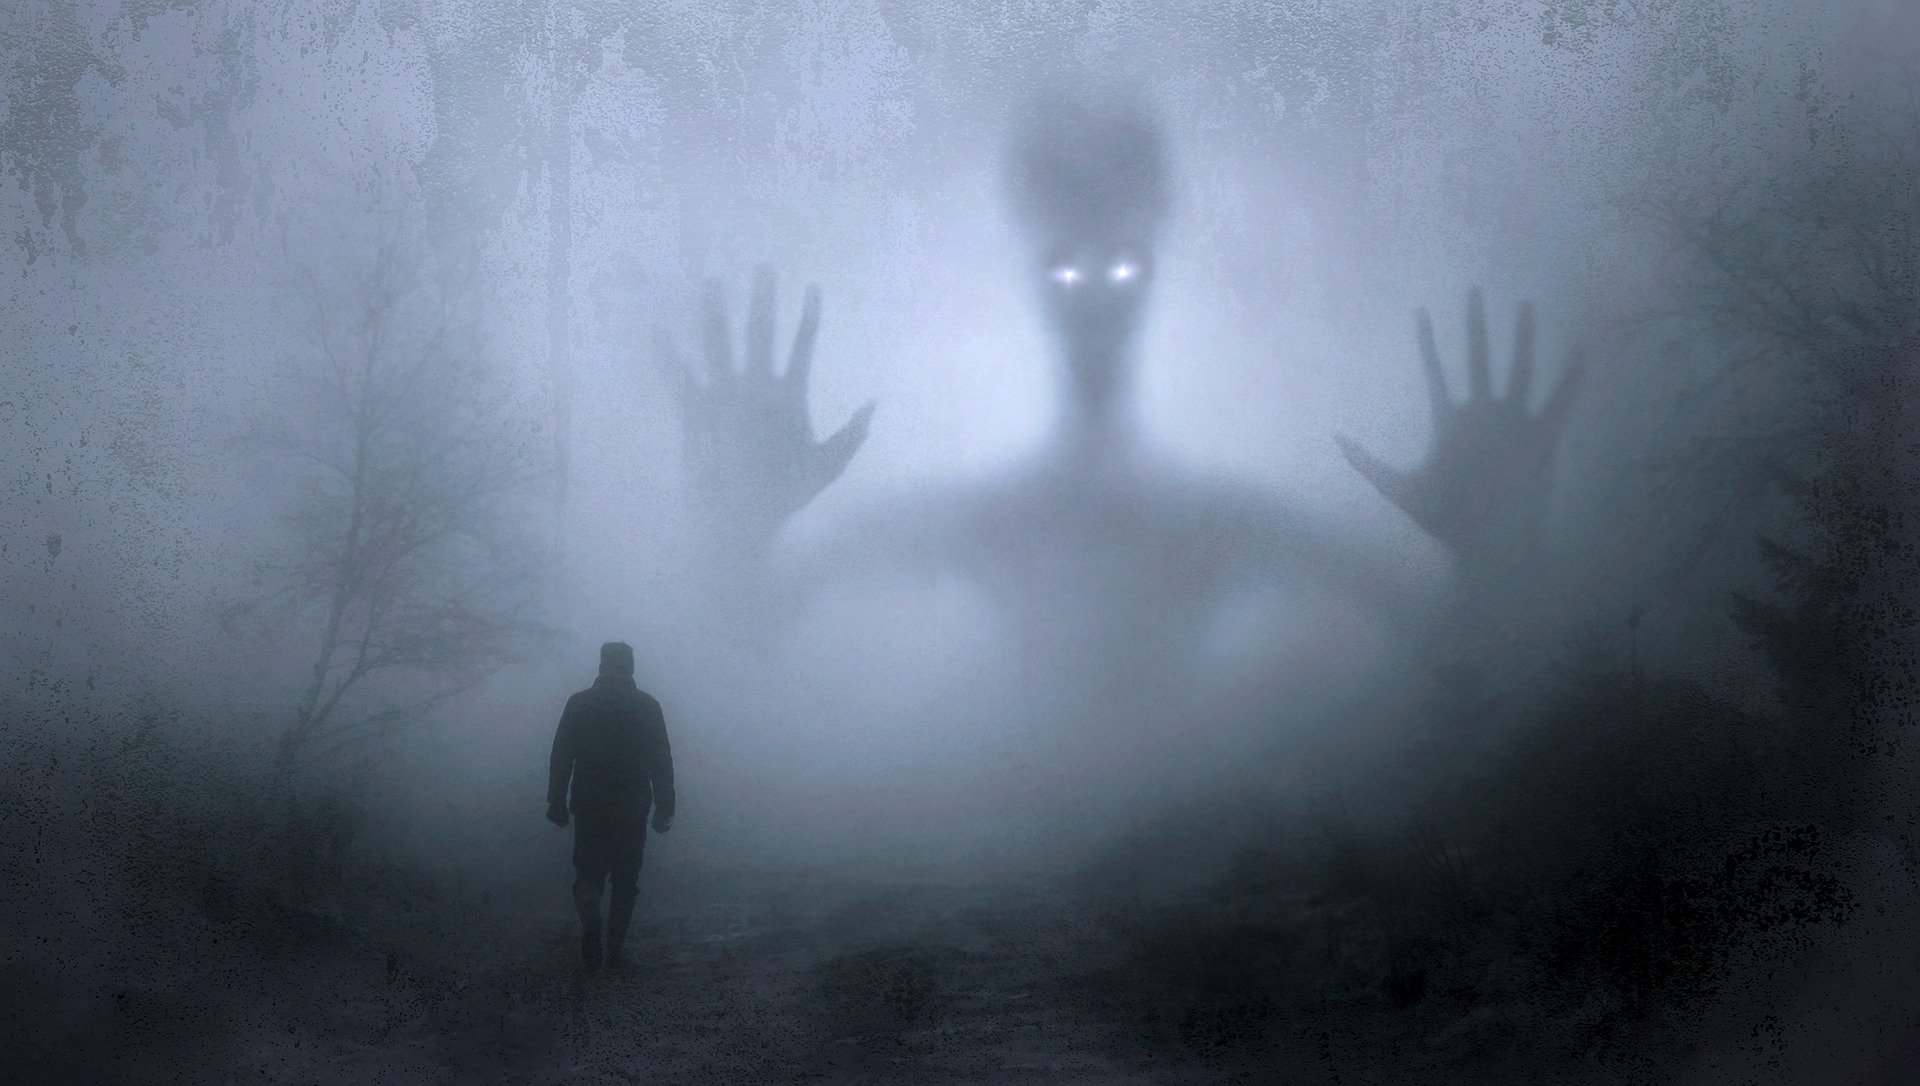 man walking in a foggy area towards a spirit